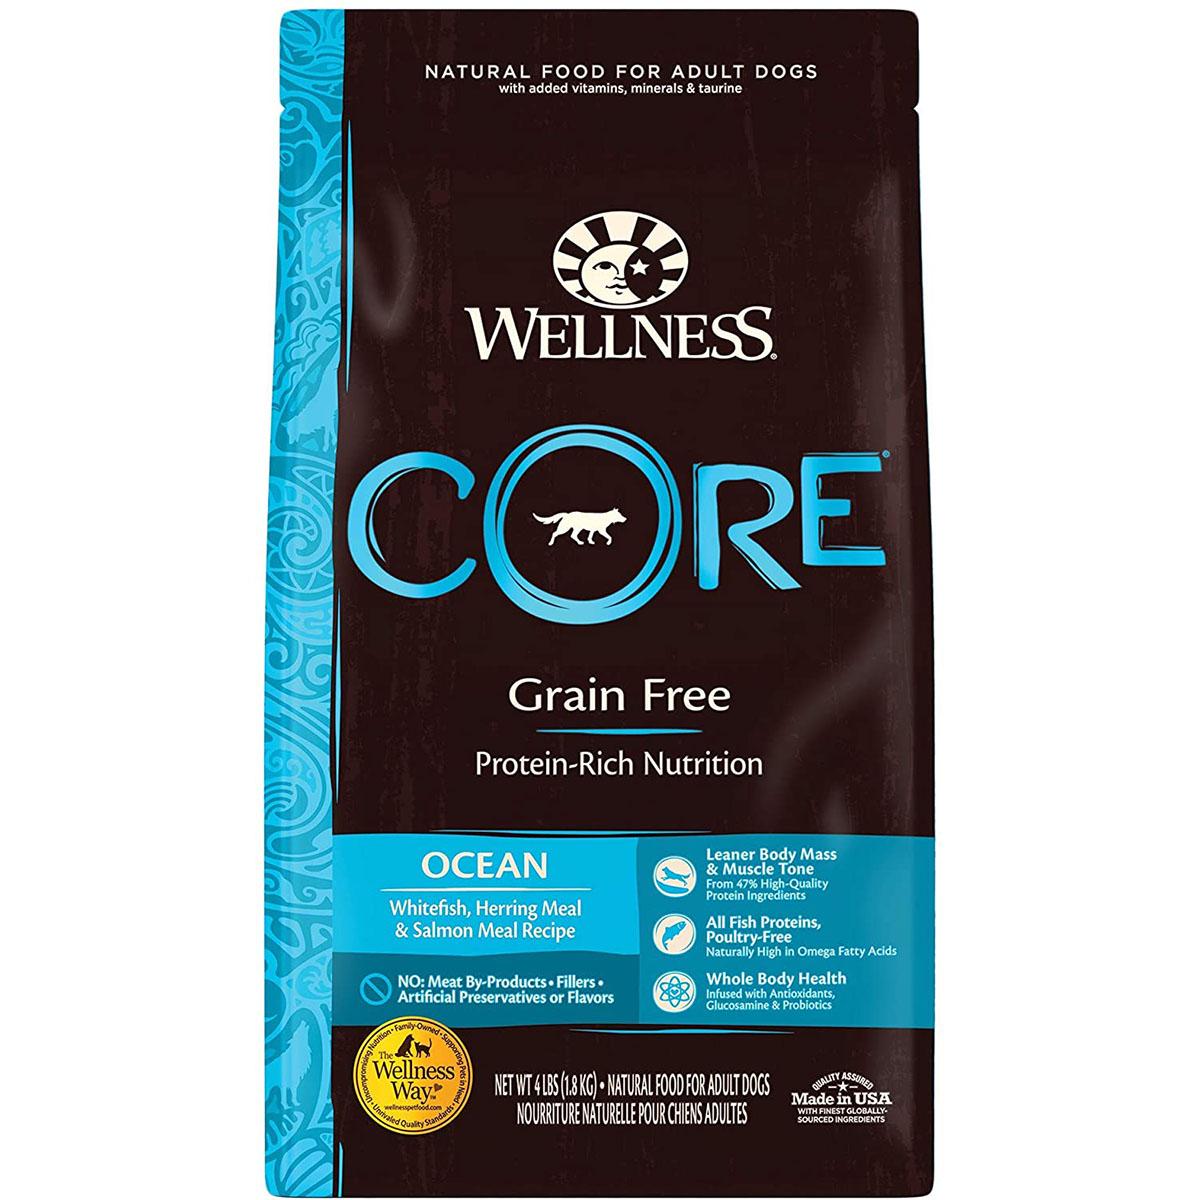 Wellness CORE Grain-Free Ocean Dry Dog Food - Whitefish, Herring Meal & Salmon Meal Recipe